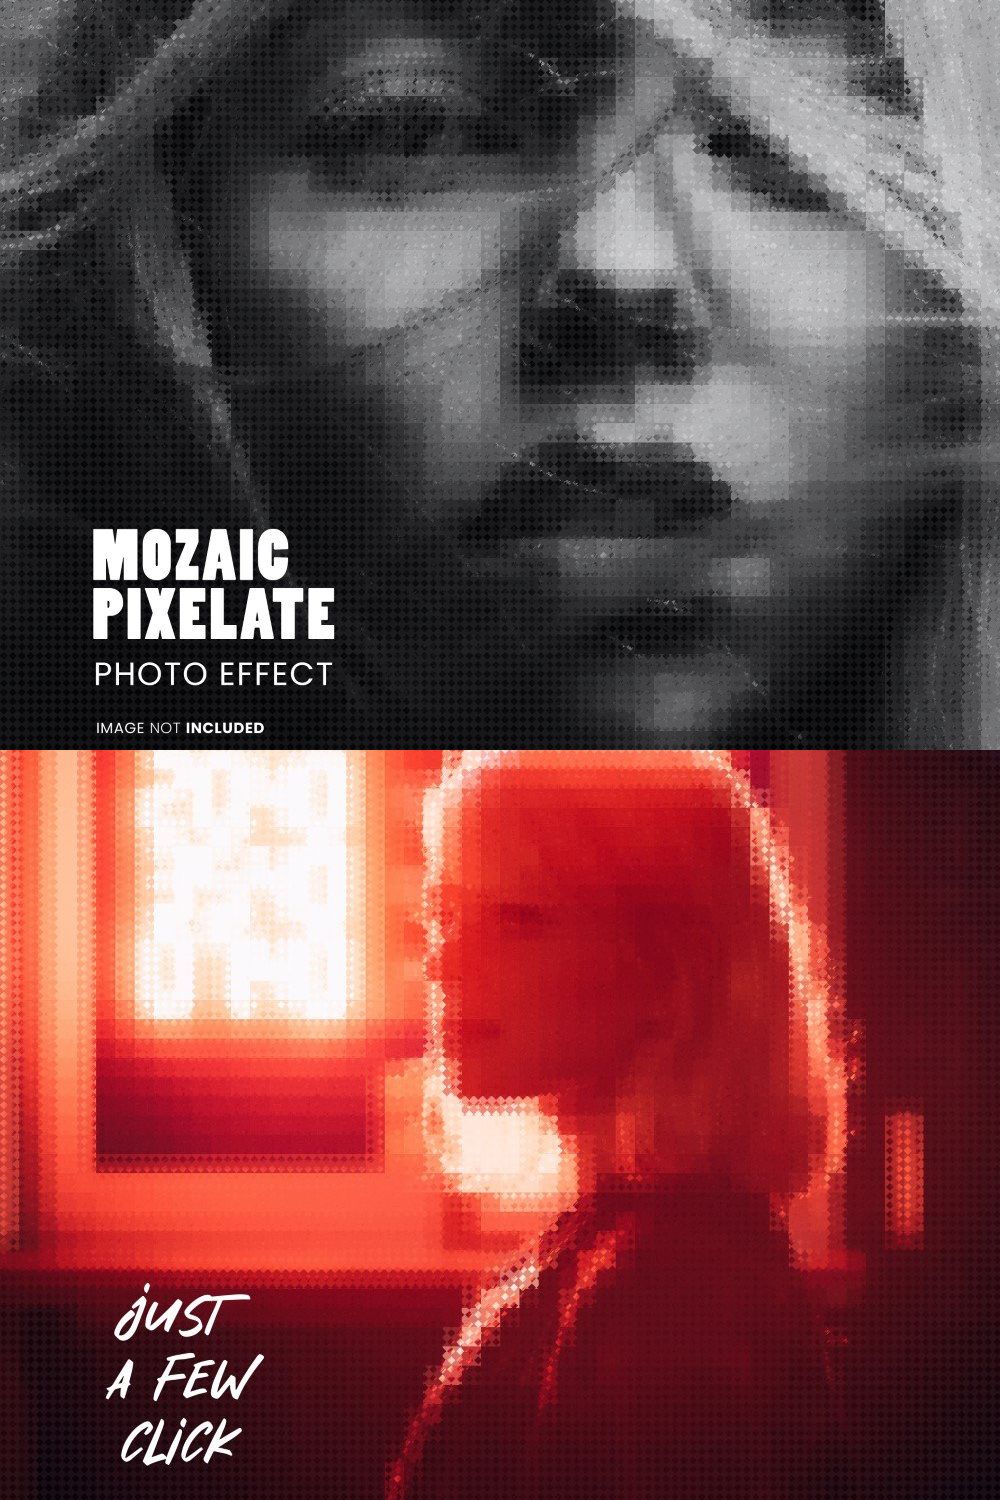 Mosaic Pixelate Photo Effect pinterest preview image.